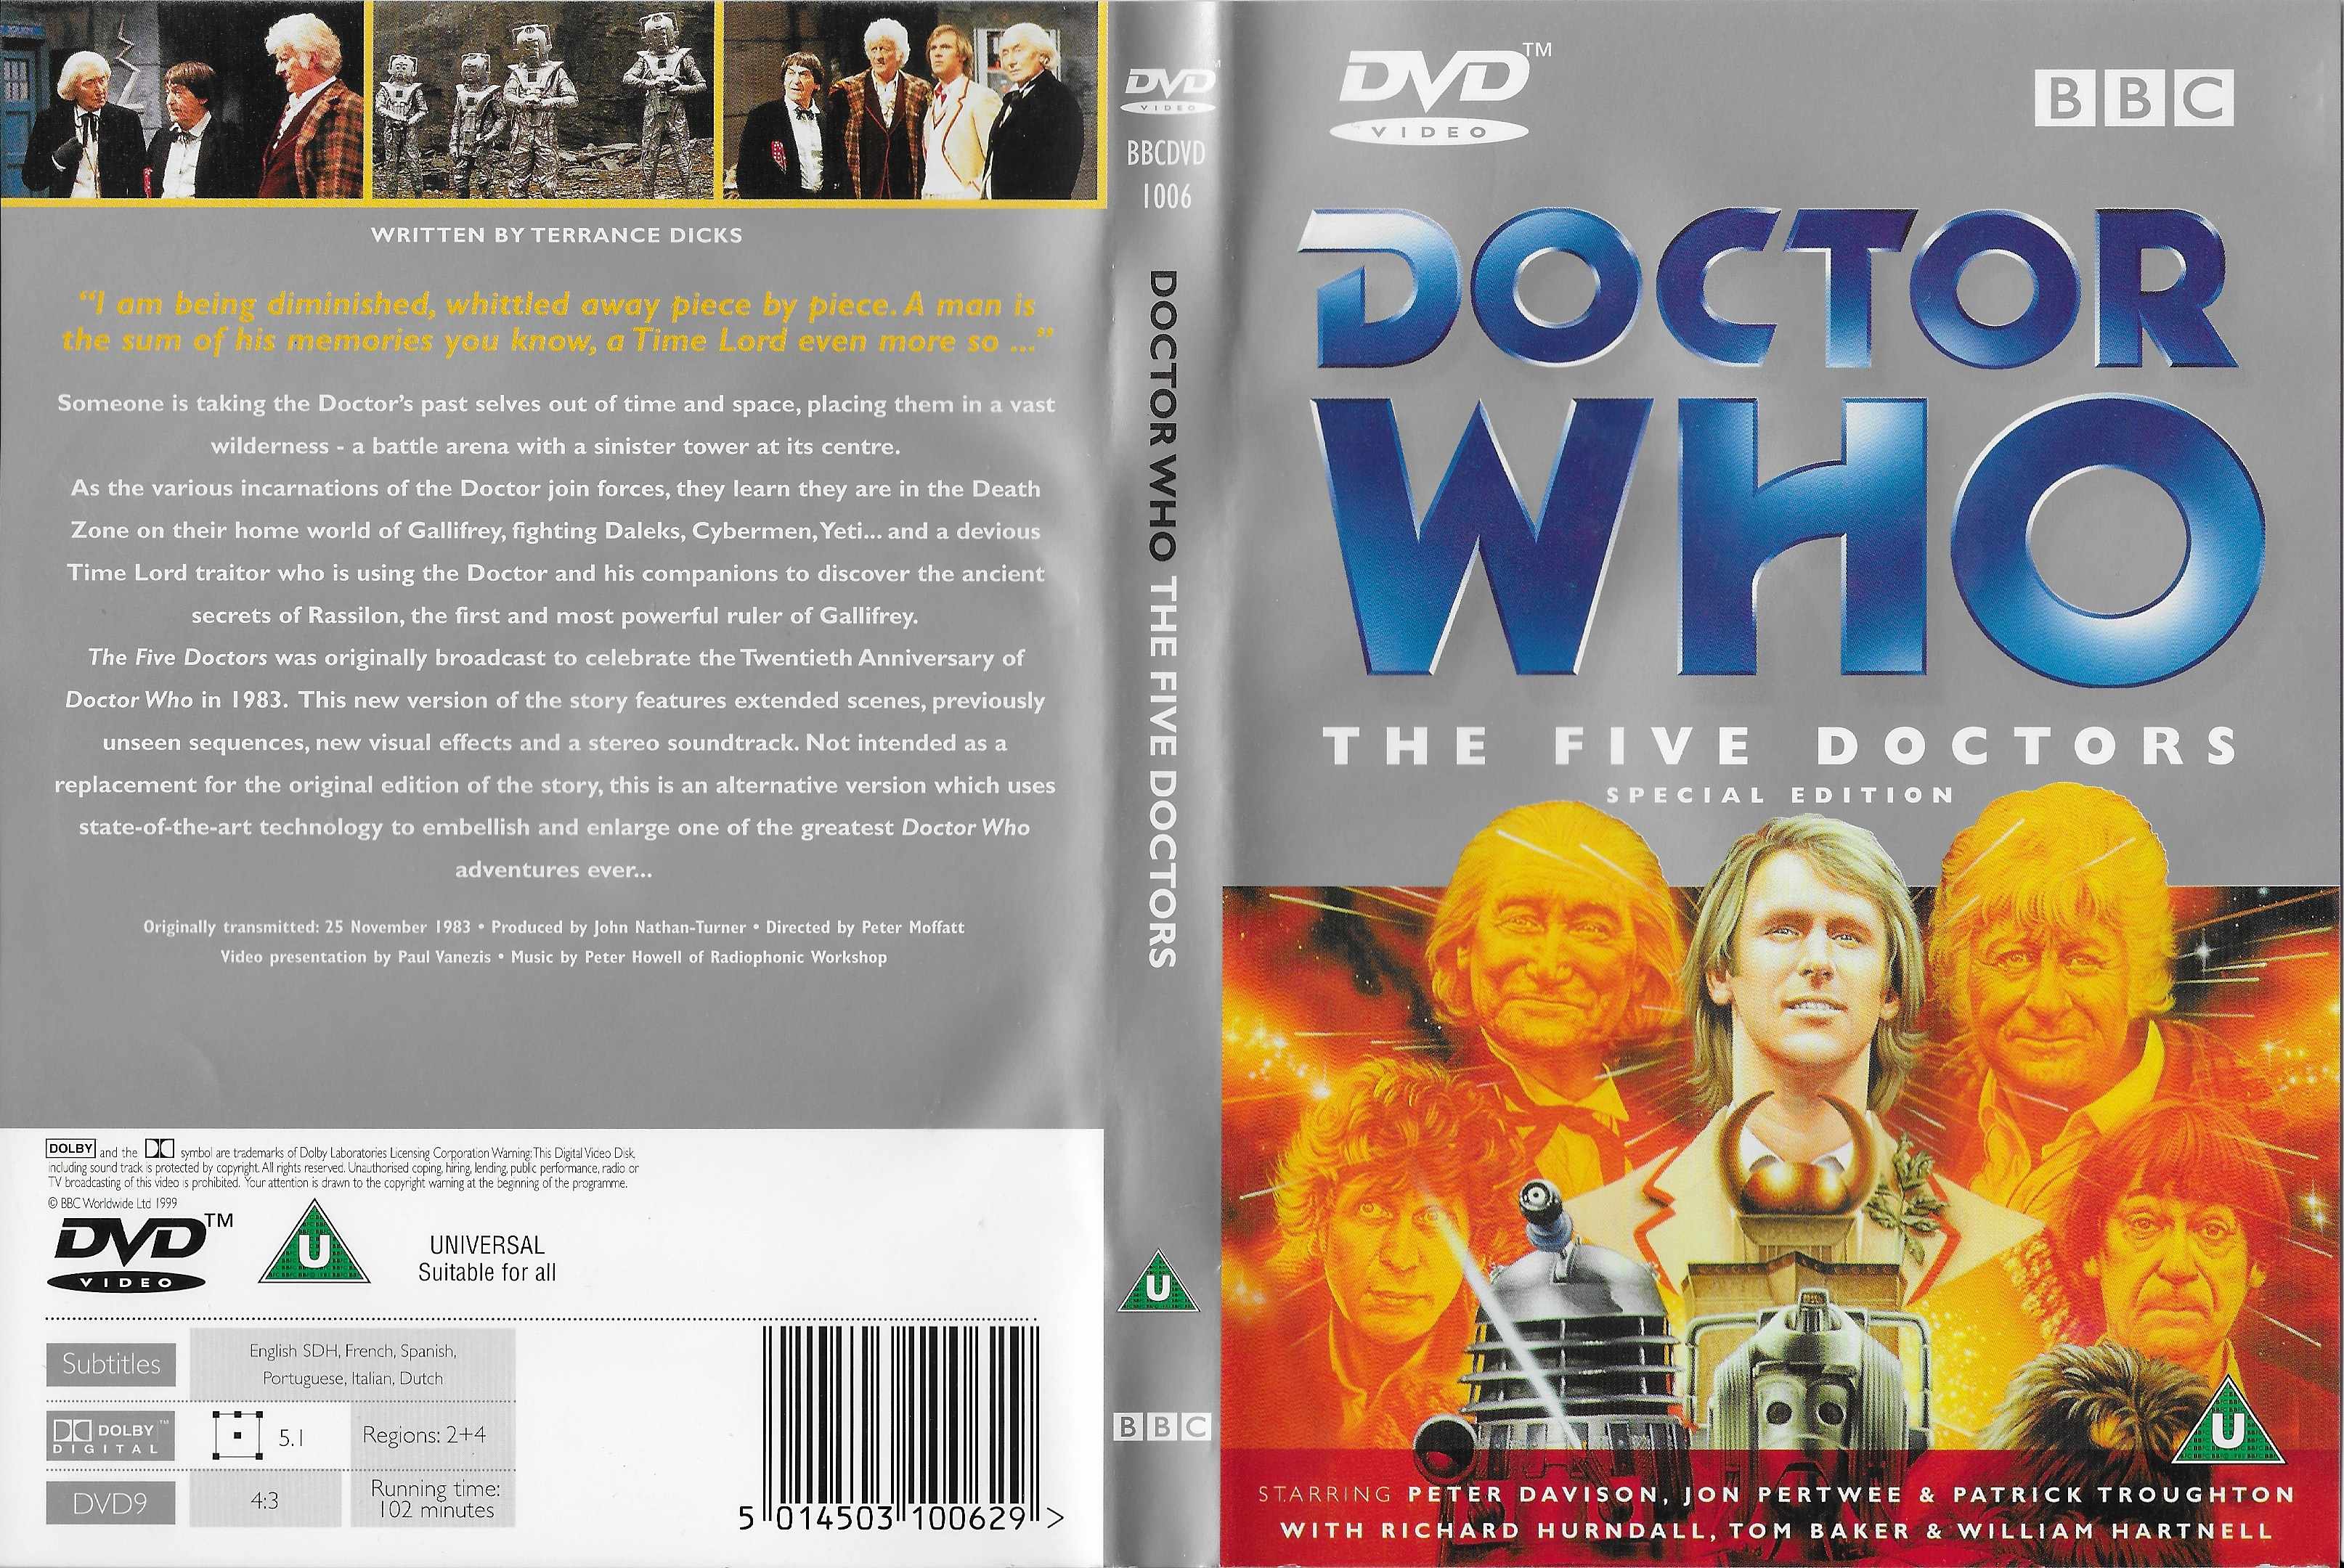 Back cover of BBCDVD 1006